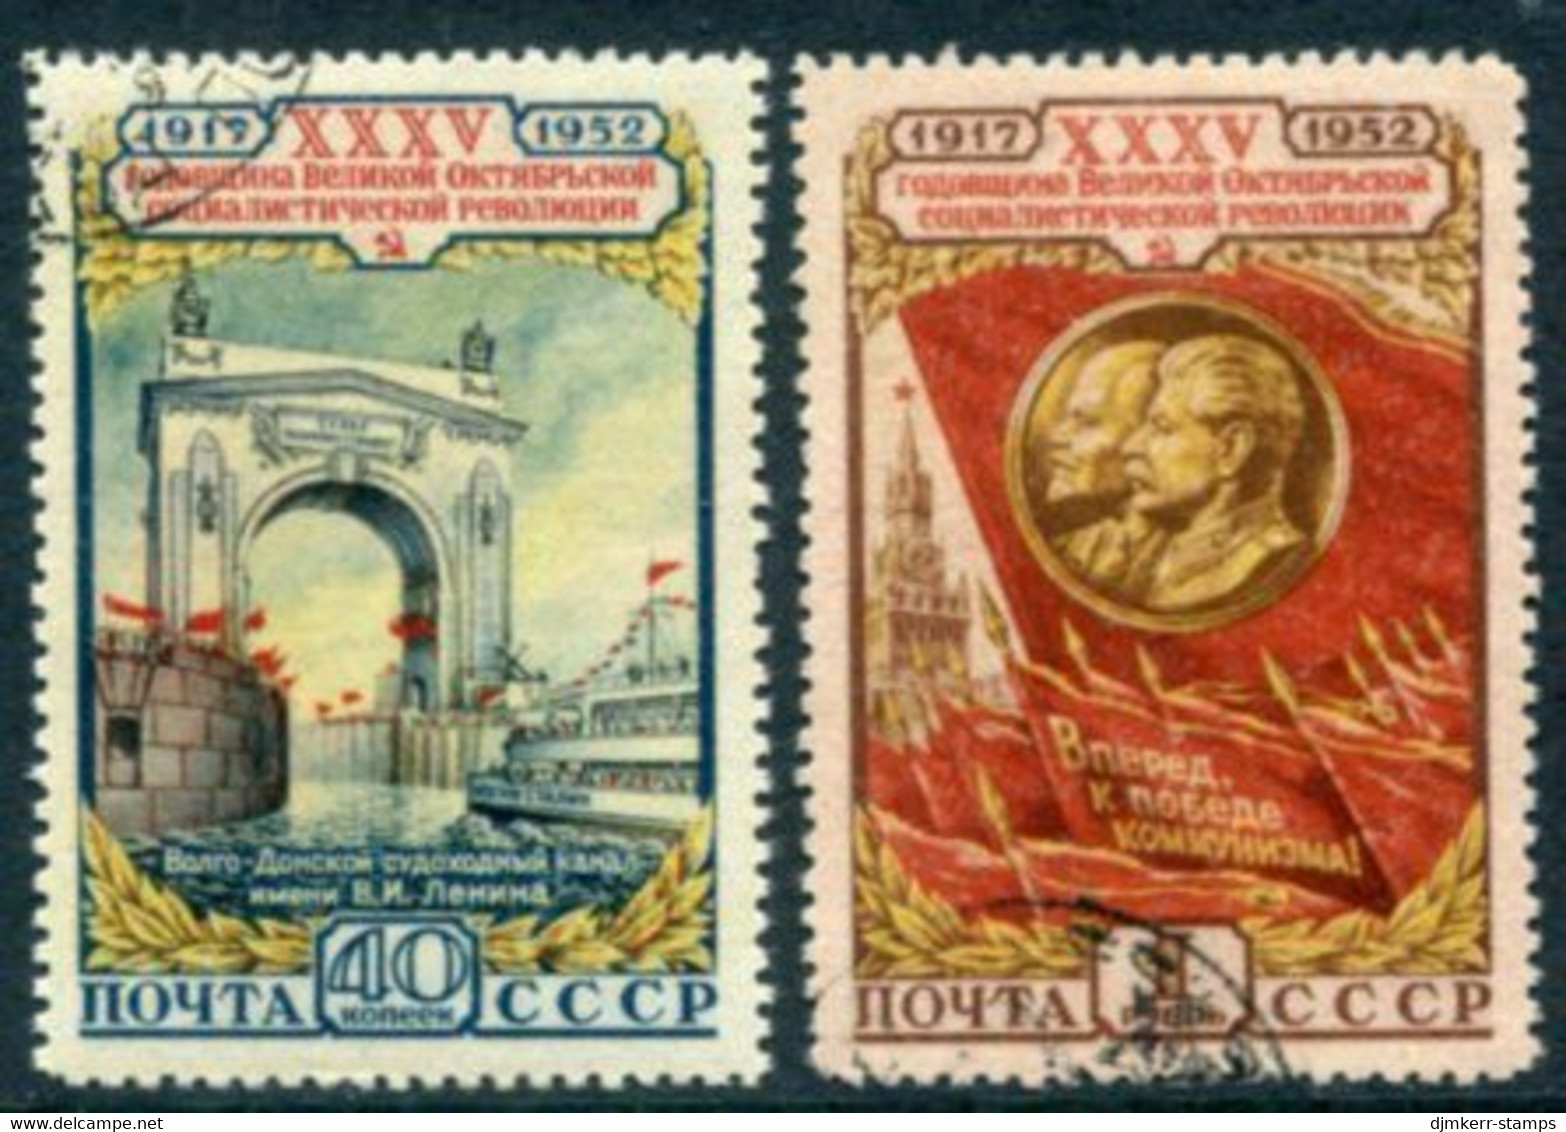 SOVIET UNION 1952 October Revolution  Anniversary Used.  Michel 1646-47 - Usati